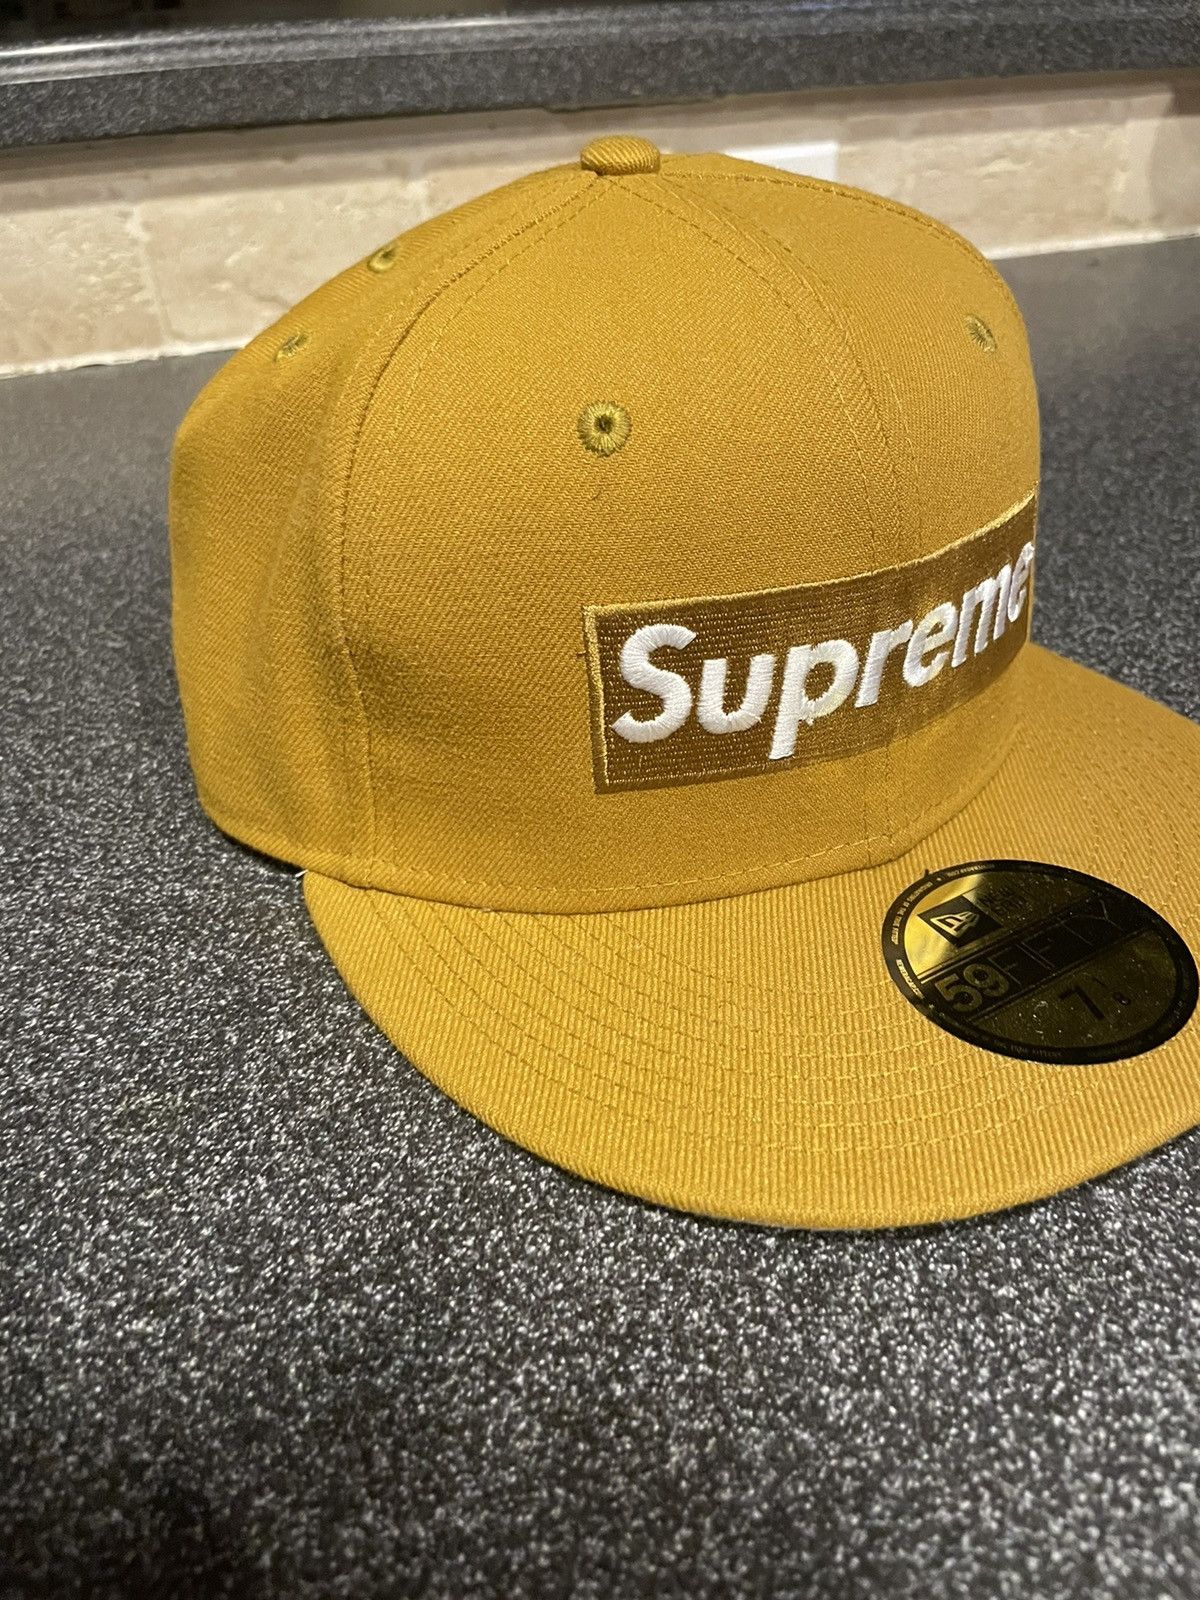 Supreme SUPREME X NEW ERA WORLD FAMOUS 27x CHAMPS HAT | Grailed